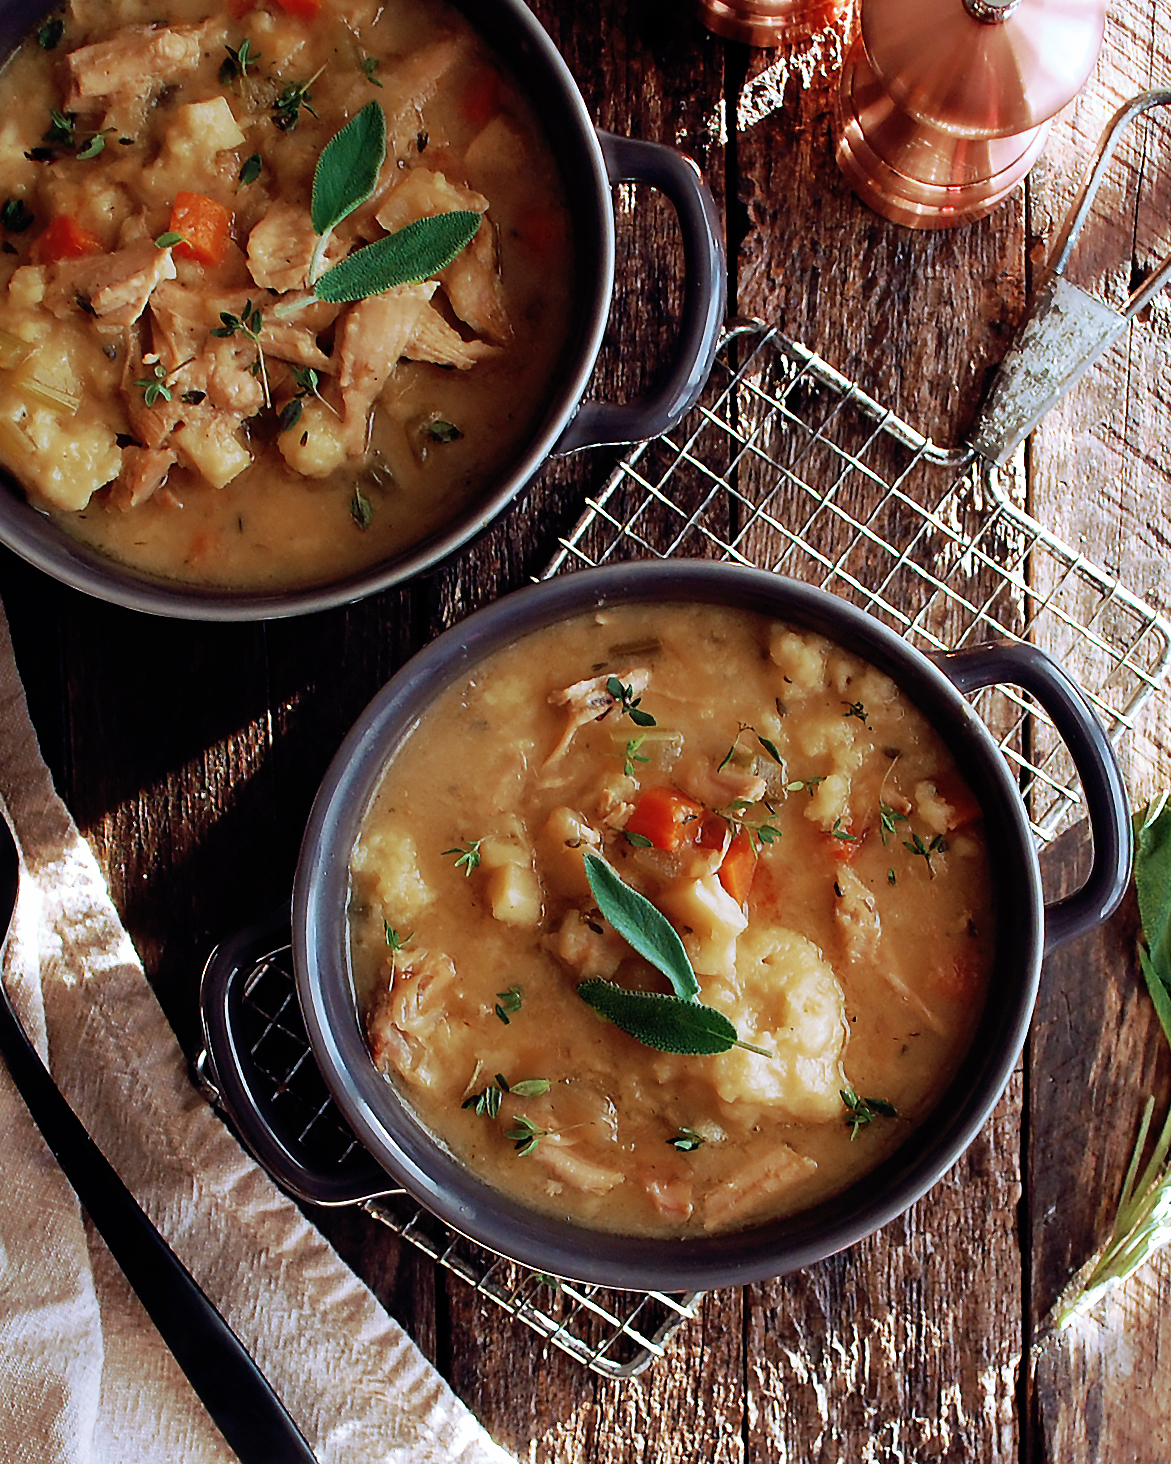 Leftover Turkey & Dumpling Soup - The Original Dish